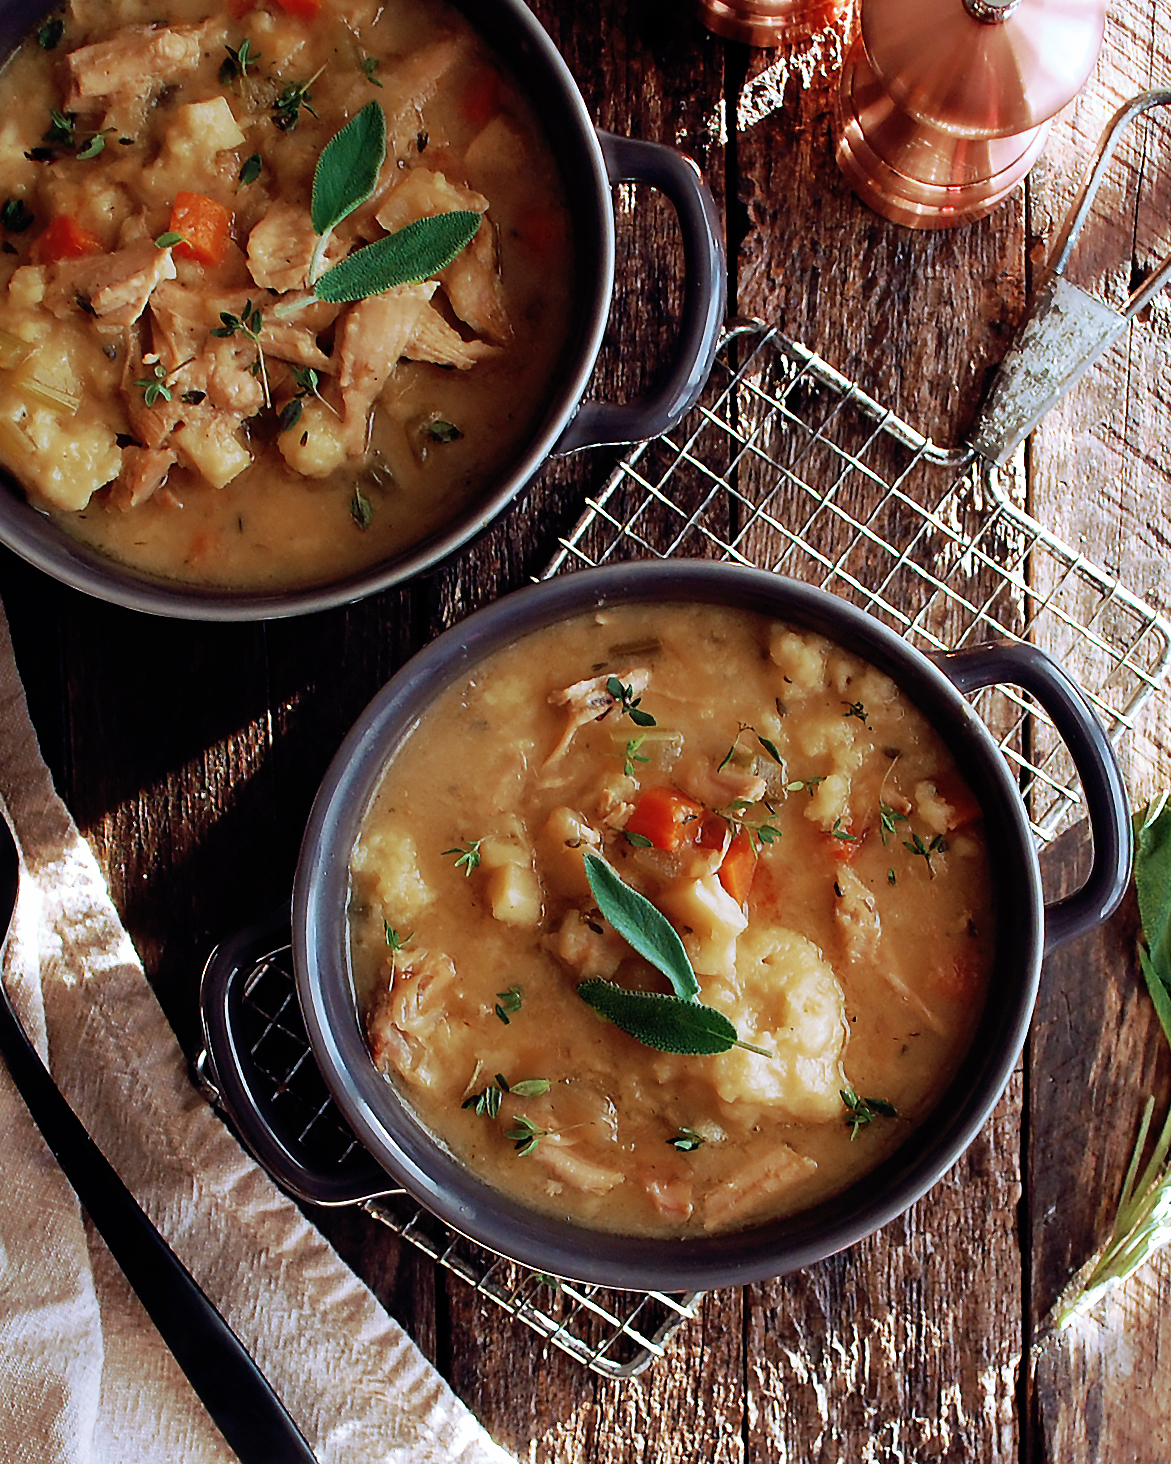 Leftover Turkey & Dumpling Soup - The Original Dish